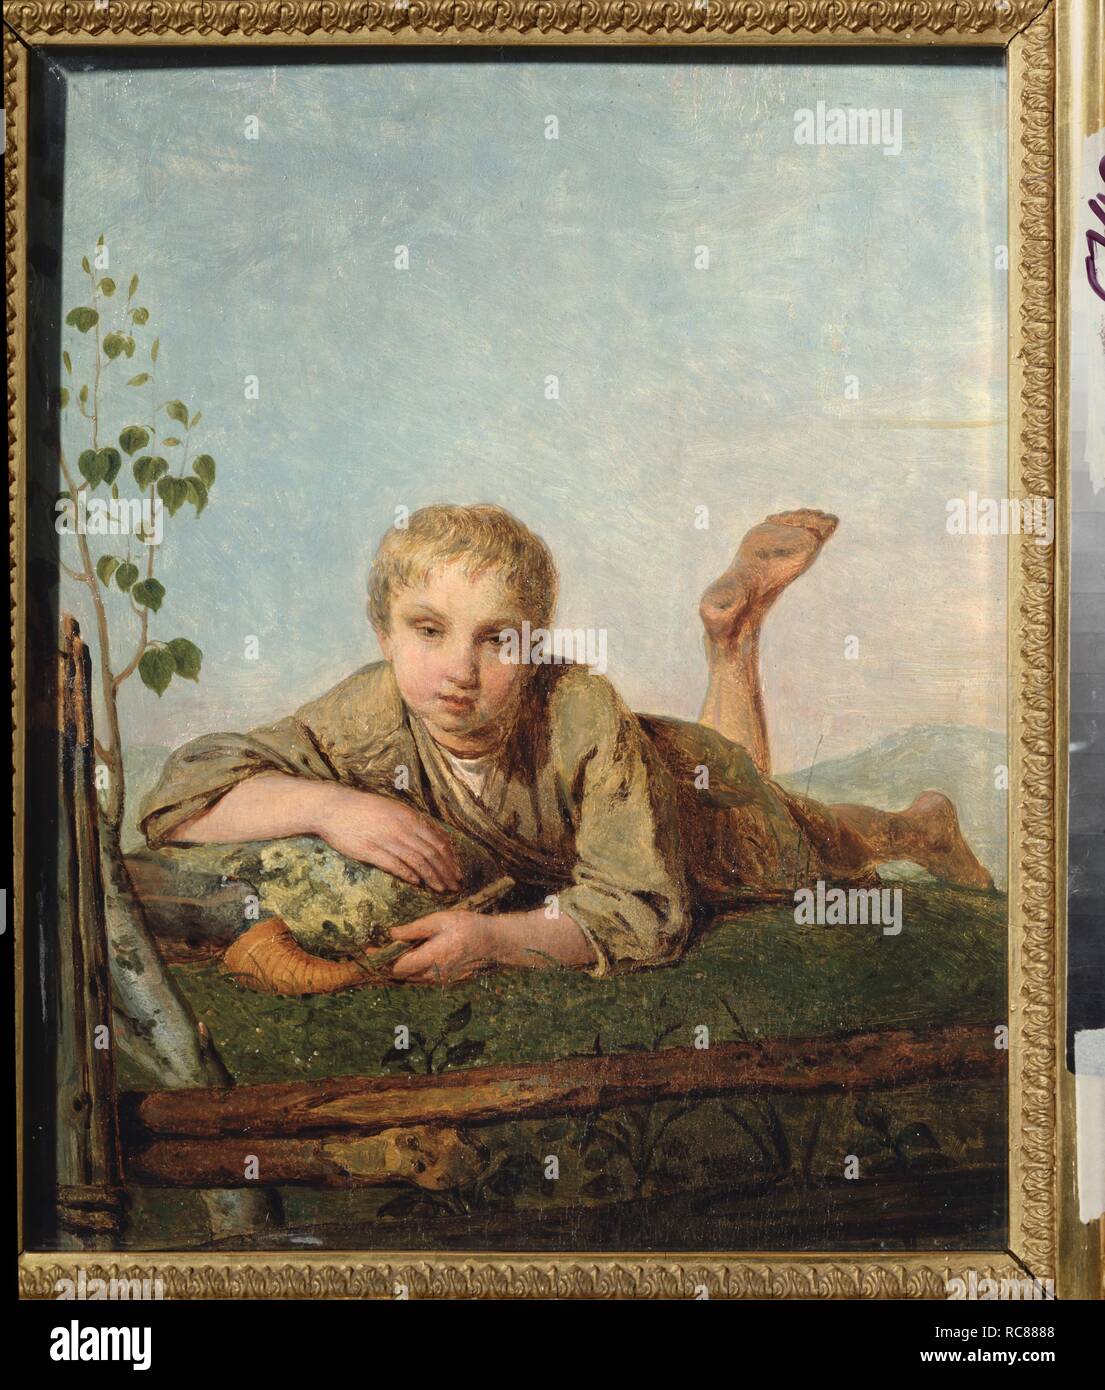 Shepherd Boy with a Pipe. Museum: Regional Art Gallery, Tver. Author: Venetsianov, Alexei Gavrilovich. Stock Photo